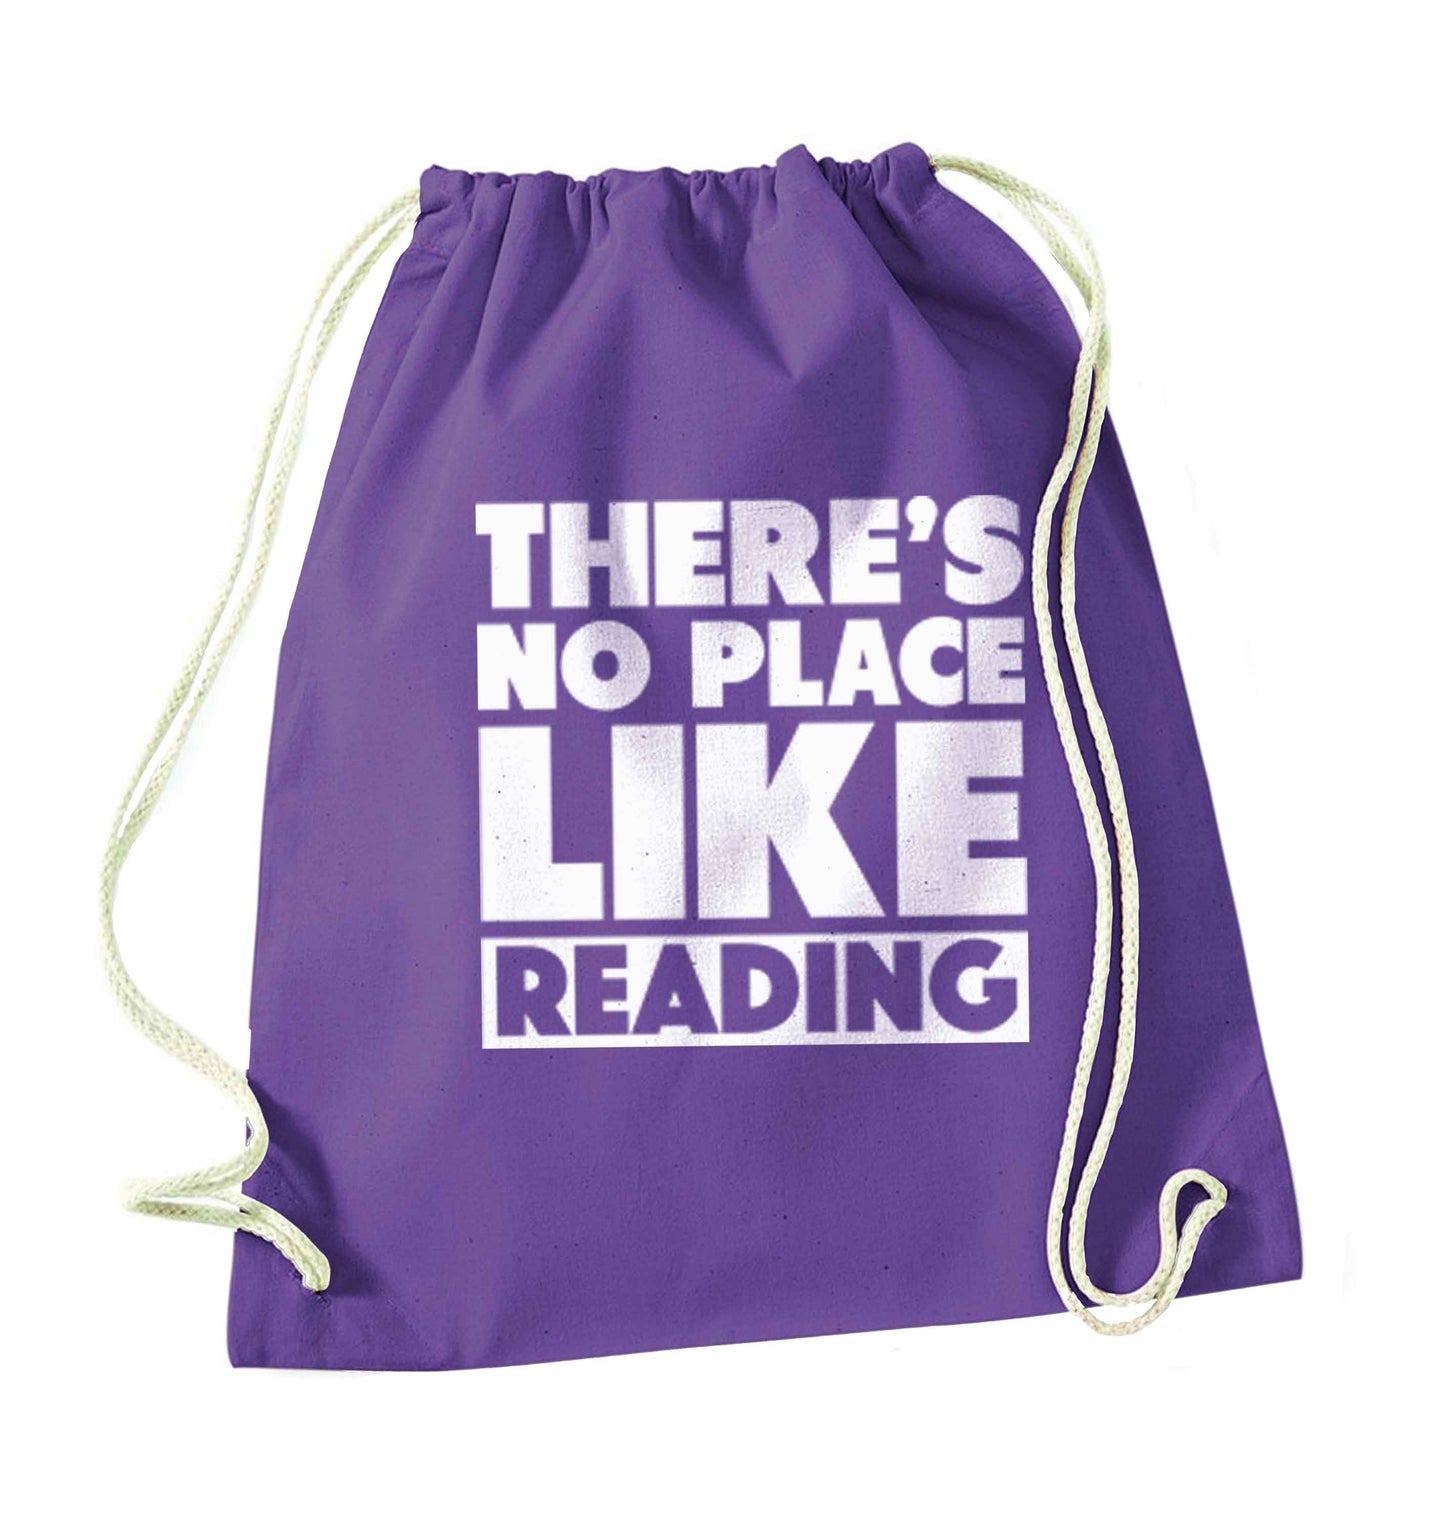 There's no place like Readingpurple drawstring bag